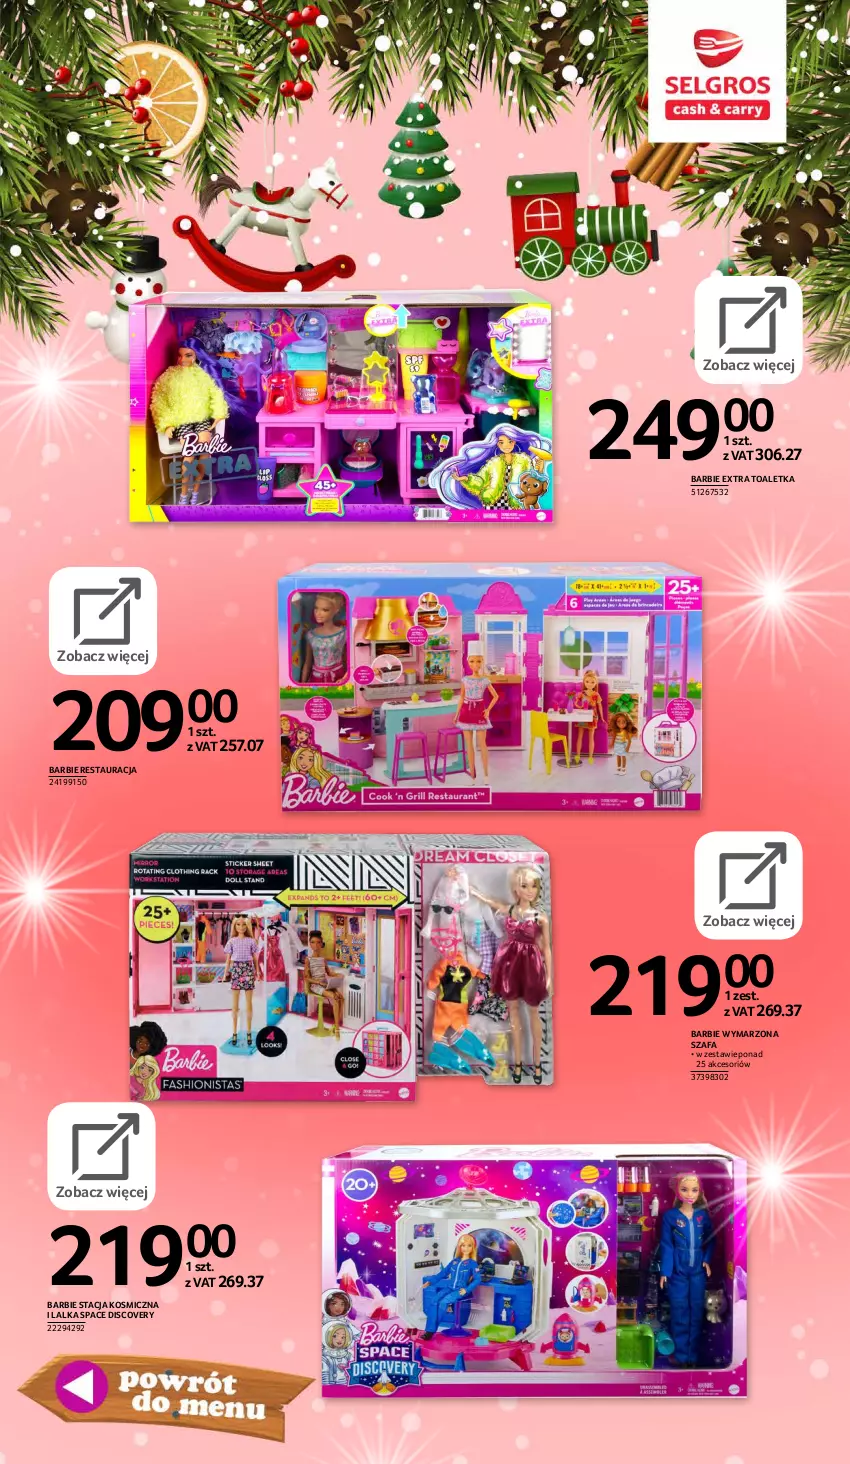 Gazetka promocyjna Selgros - E-katalog zabawki - ważna 10.11 do 24.12.2021 - strona 56 - produkty: Barbie, Discover, Fa, Lalka, Szafa, Toaletka